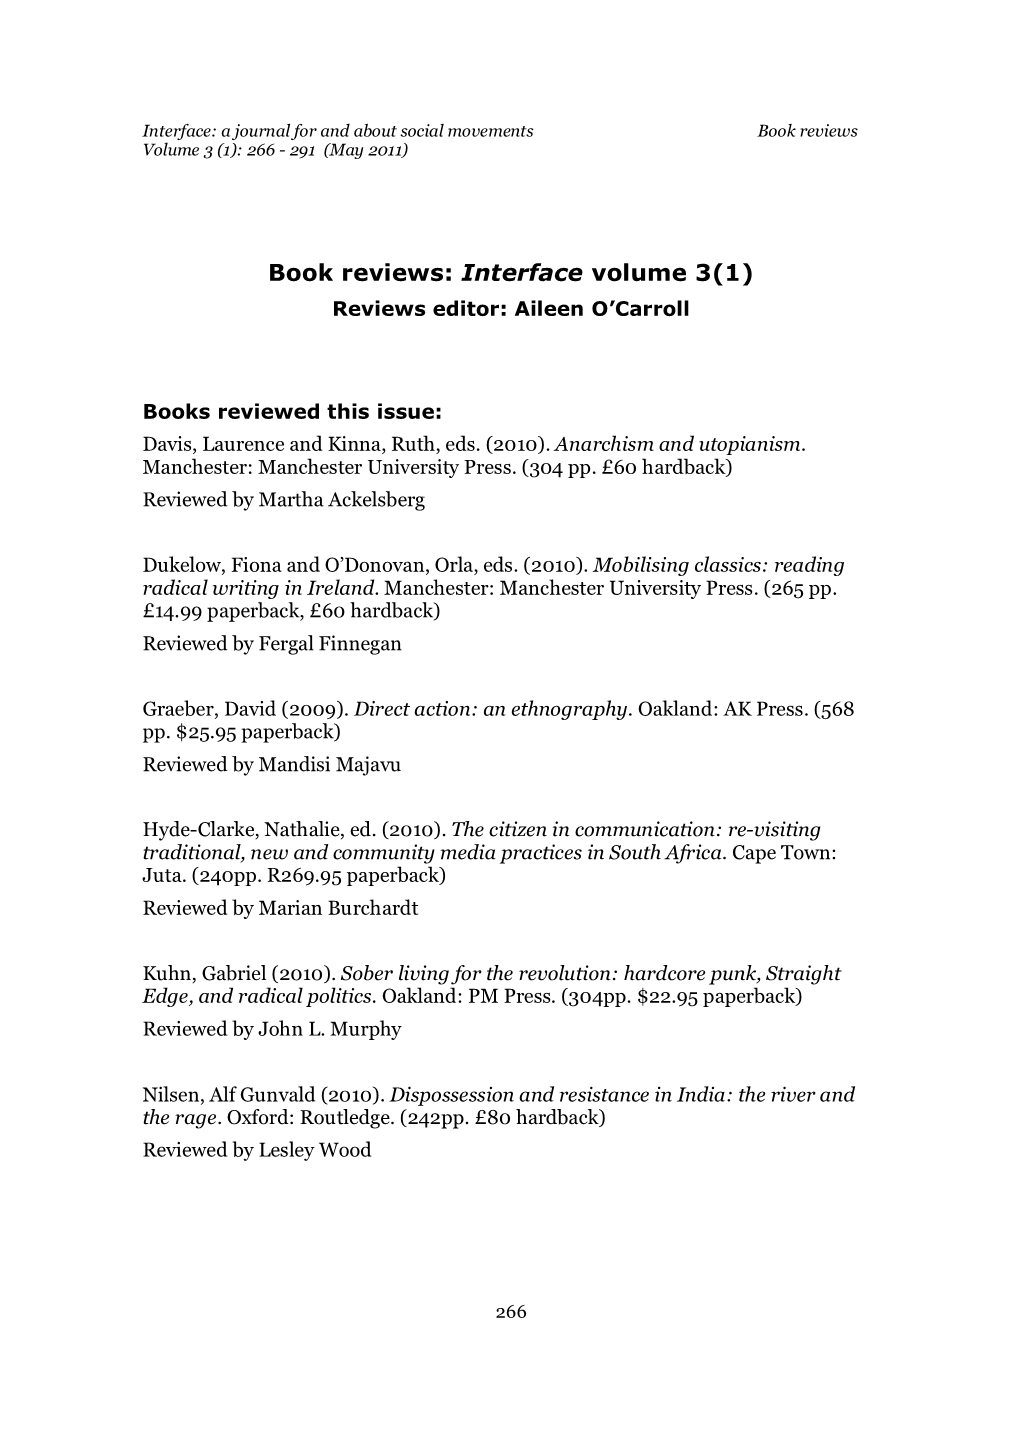 Book Reviews: Interface Volume 3(1) Reviews Editor: Aileen O’Carroll